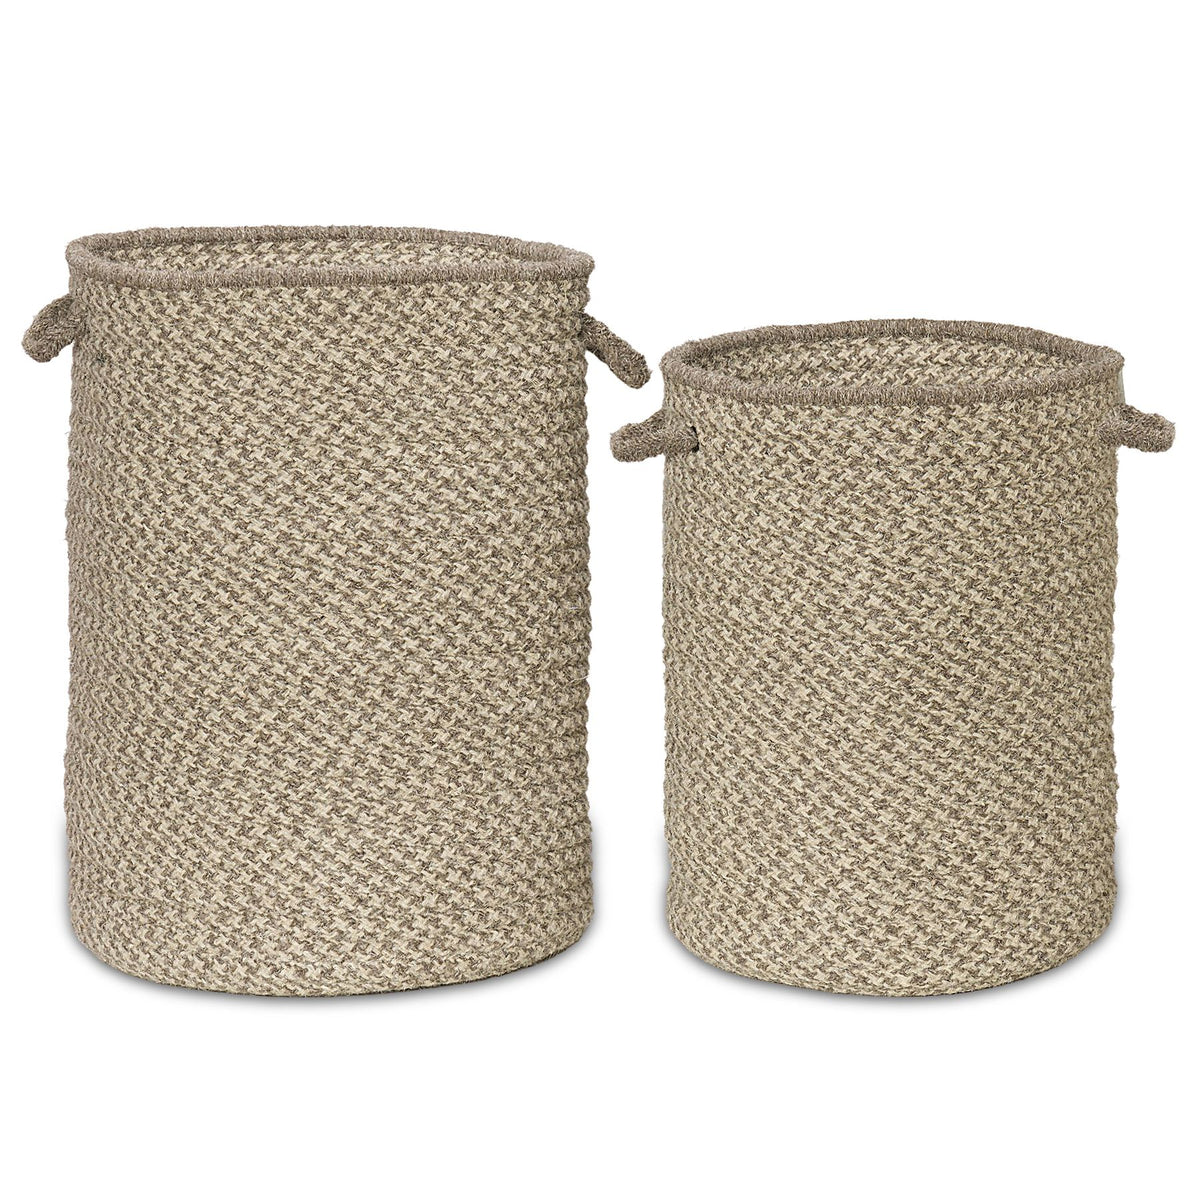 Laundry Hamper Basket Houndstooth Dark Grey Braided Natural Wool Made in USA